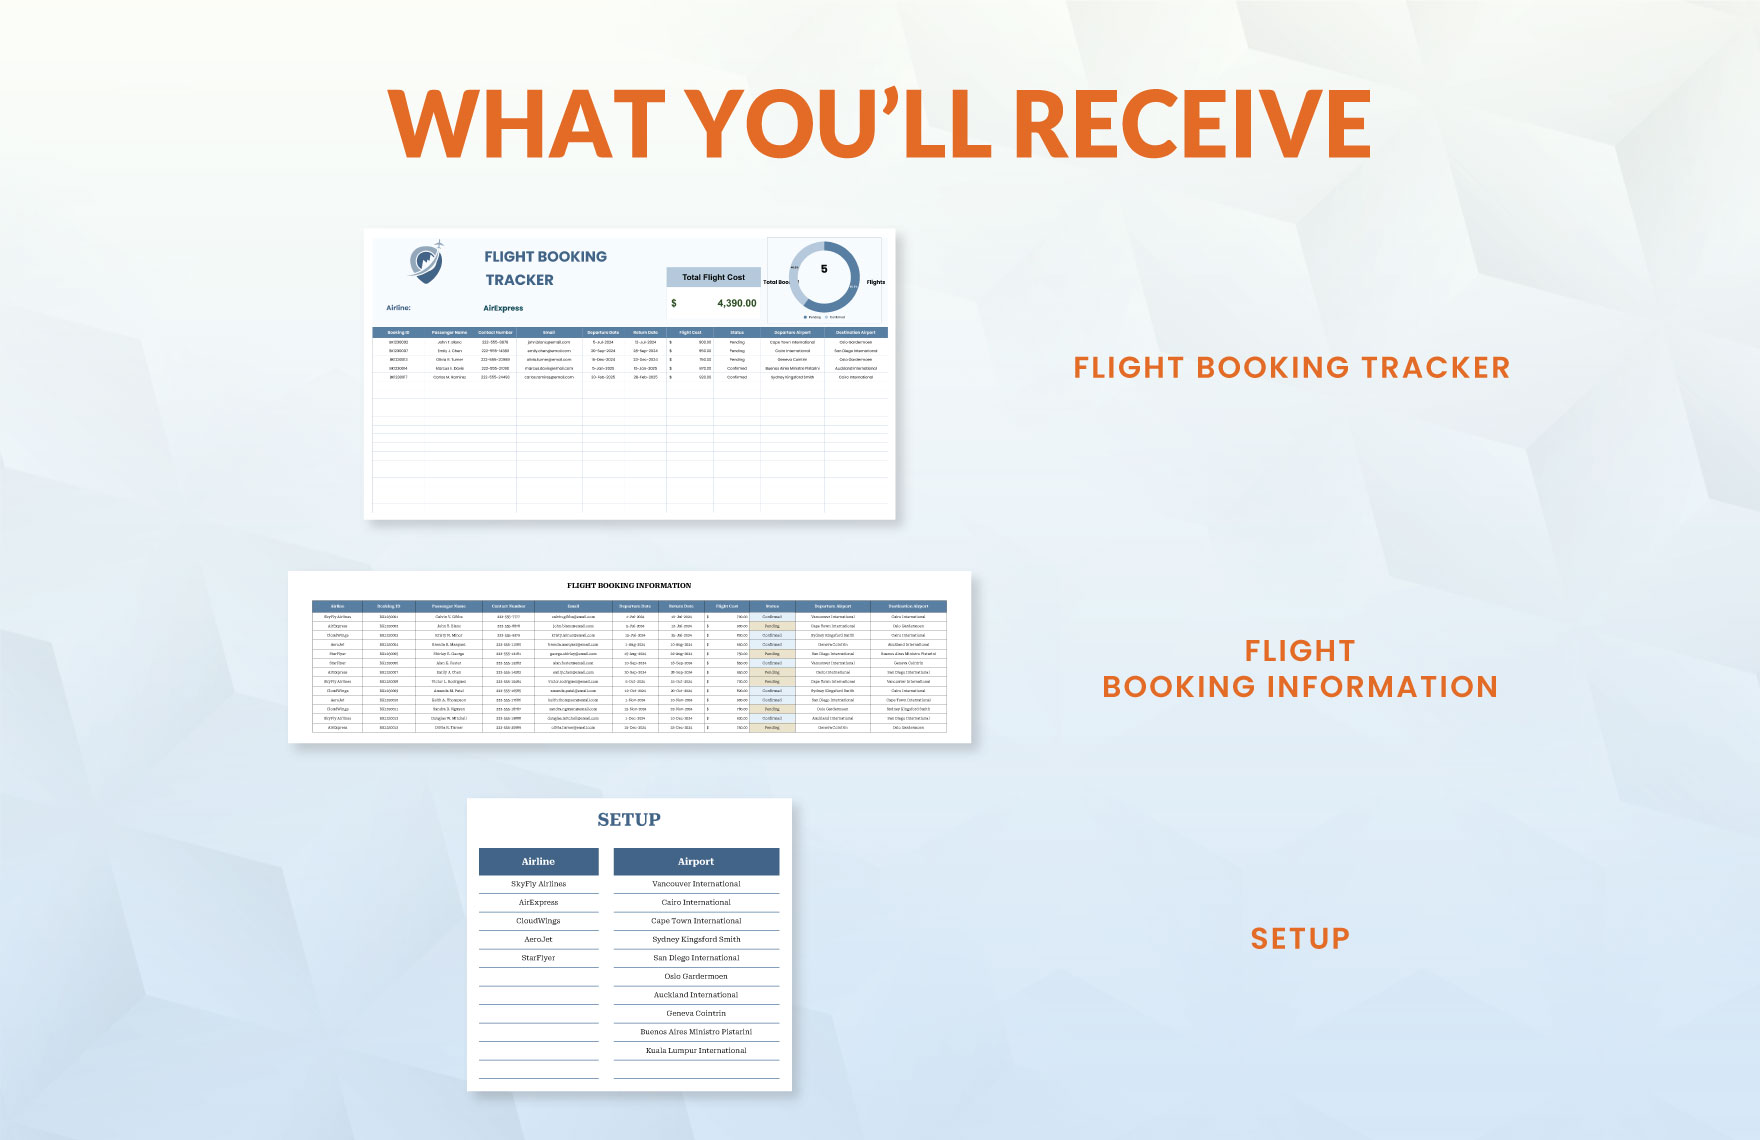 Flight Booking Tracker Template